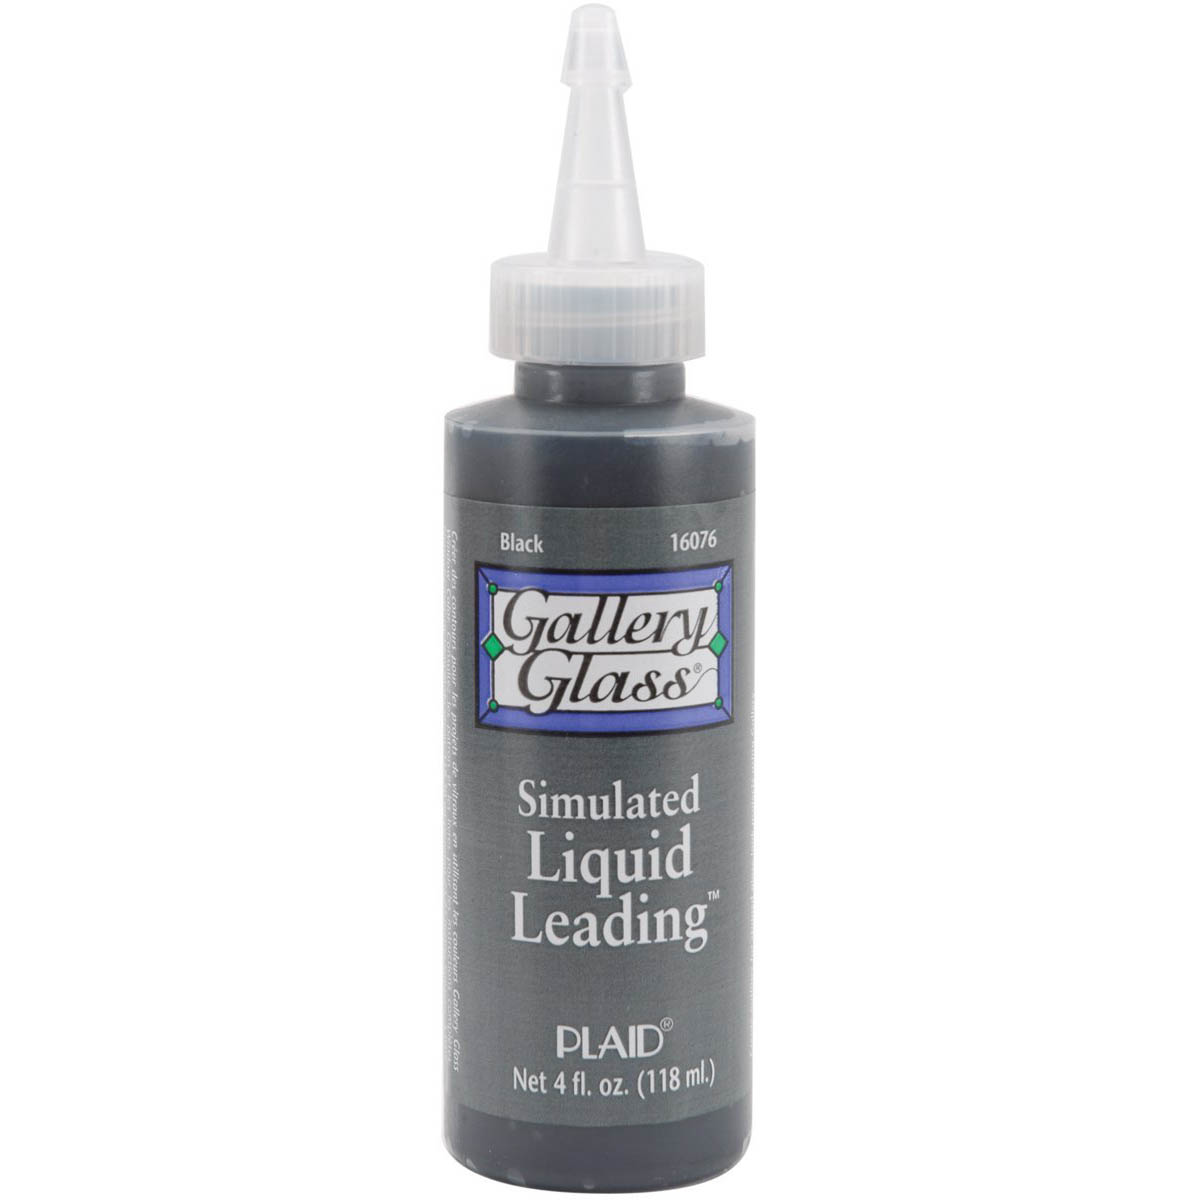 Gallery Glass ® Liquid Leading™ - Black, 4 oz. - 16076